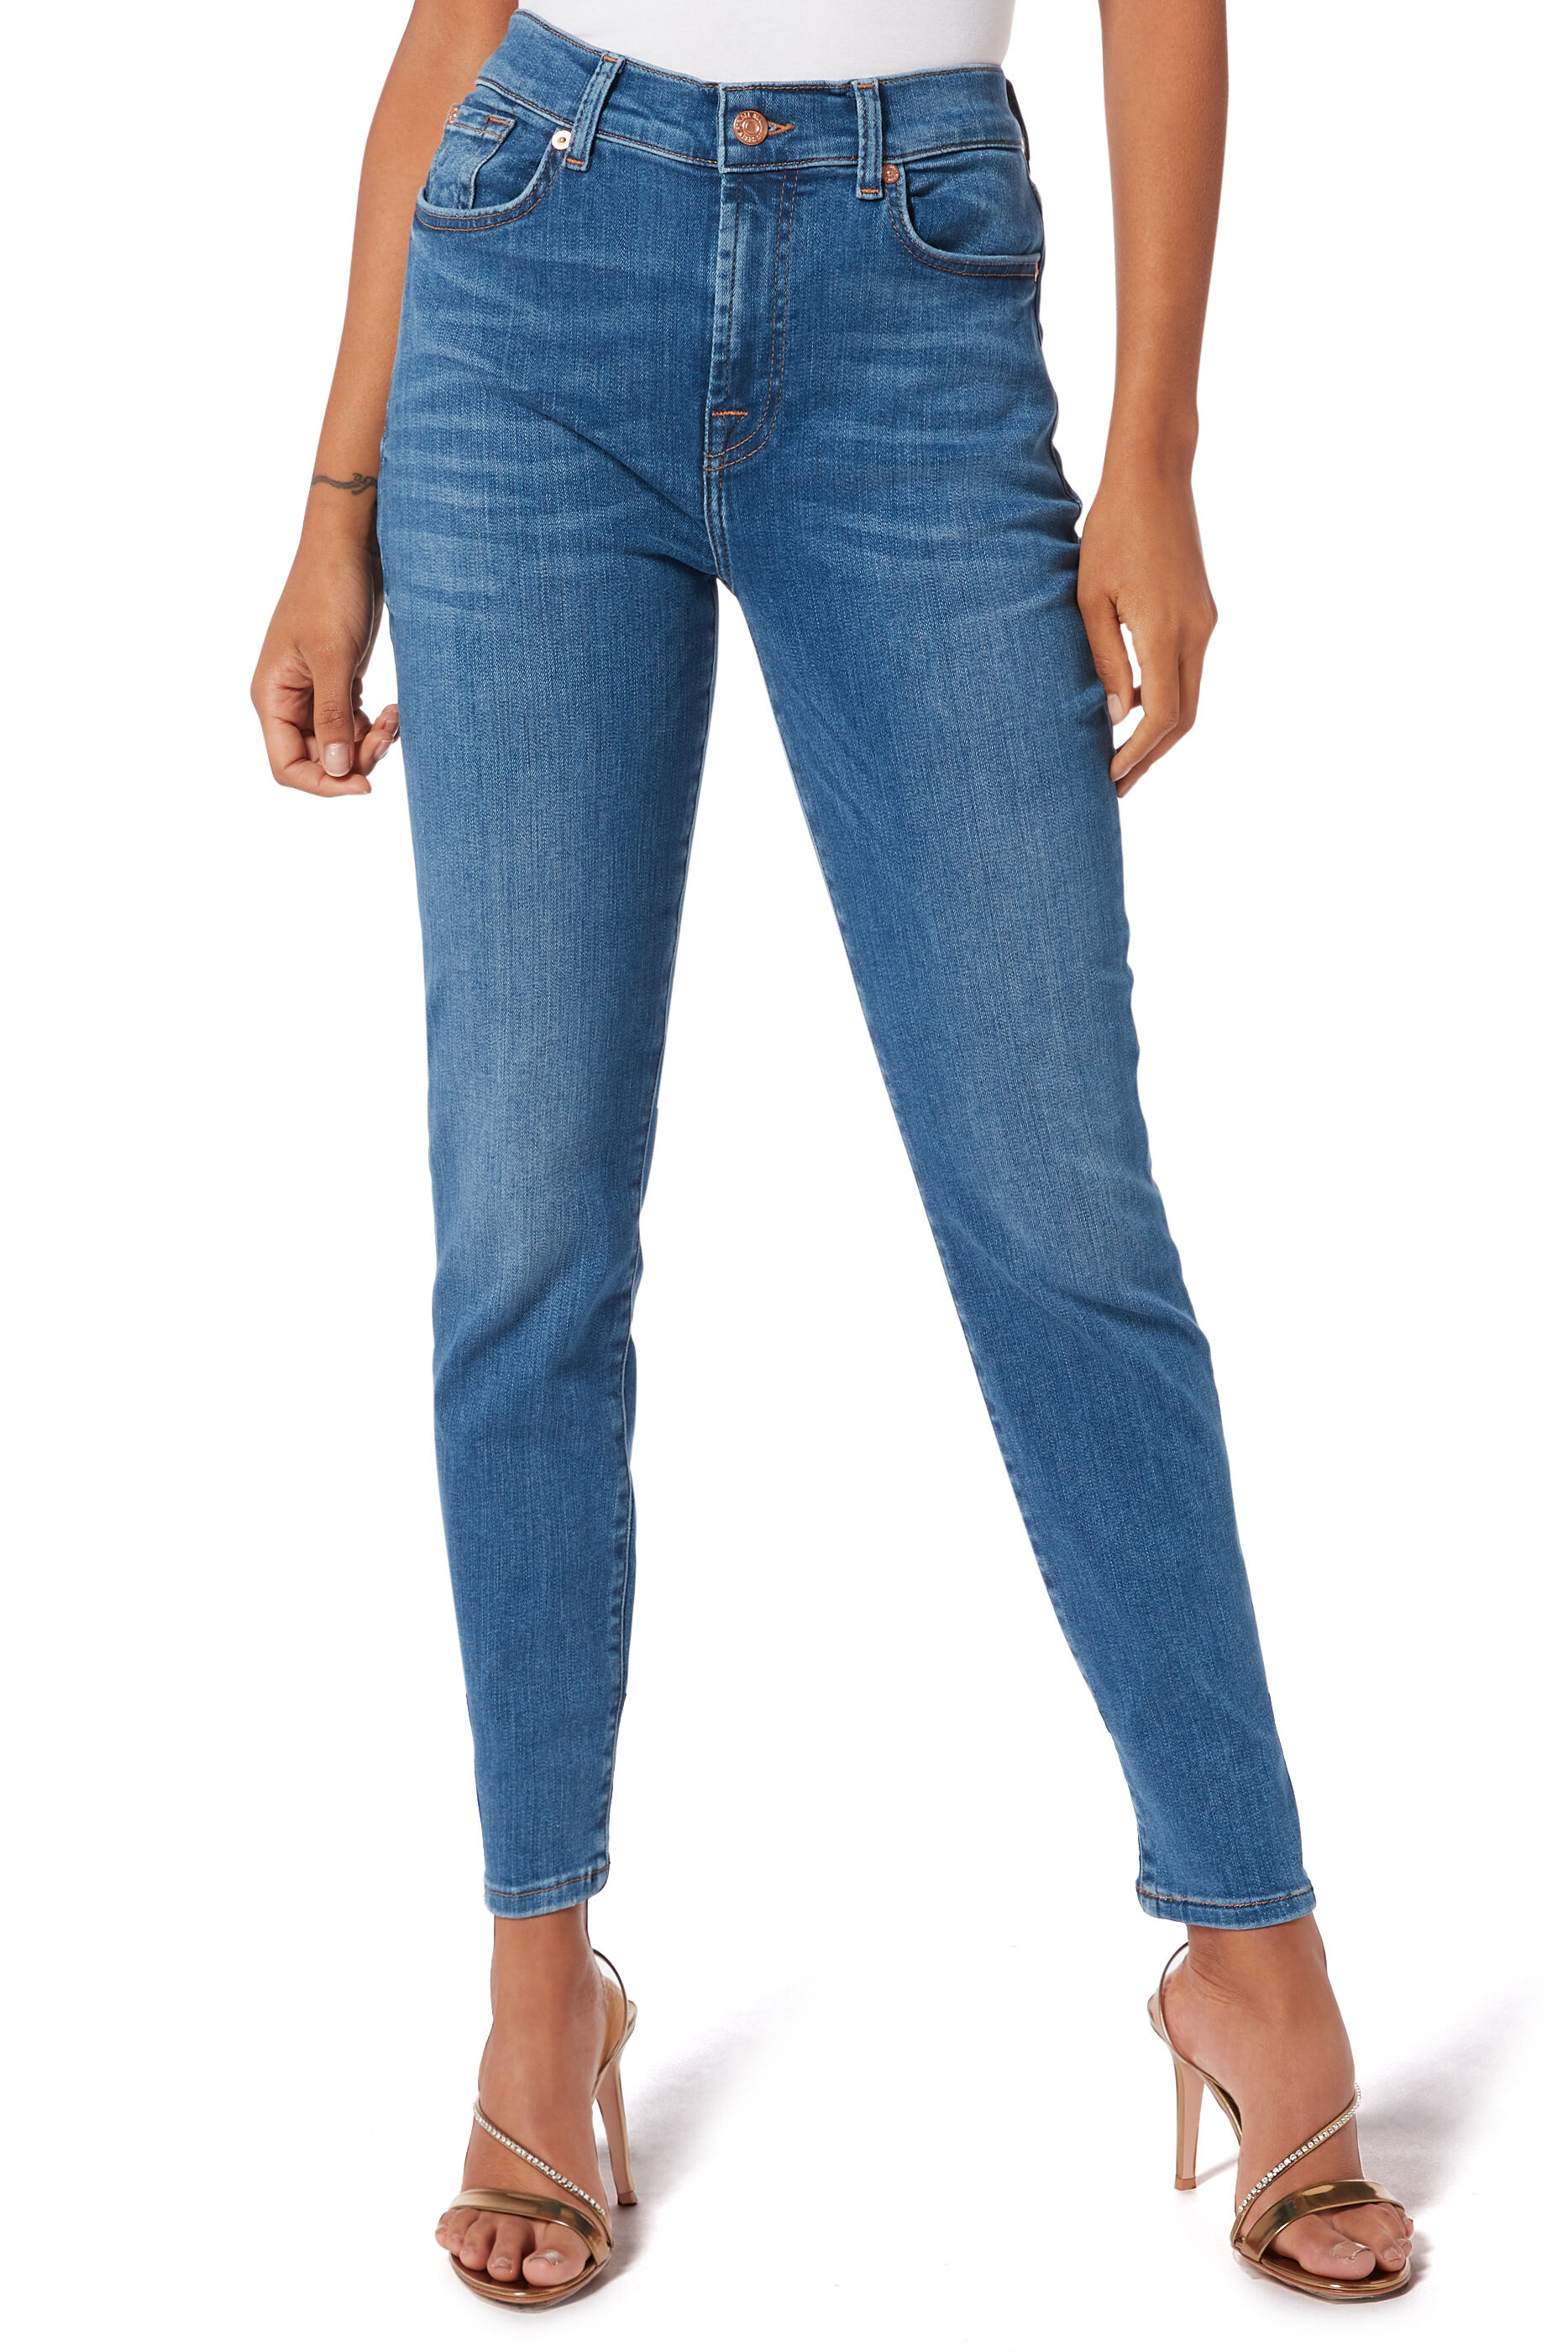 7 jeans womens sale